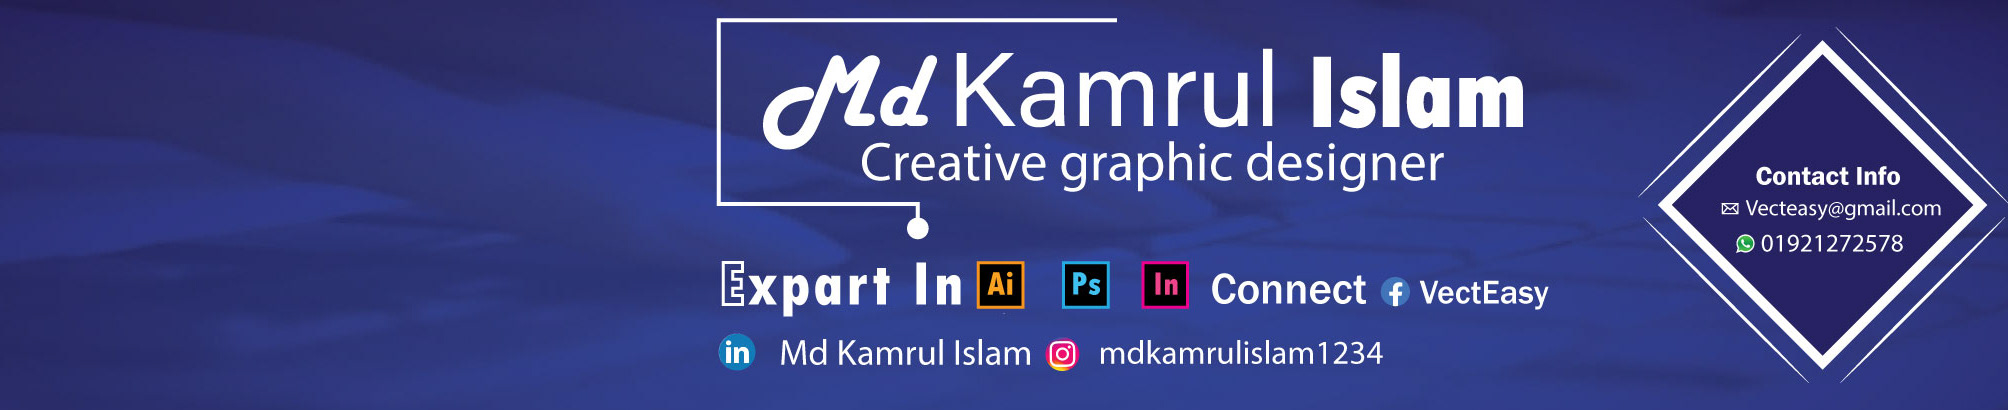 MD KAMRUL ISLAM's profile banner